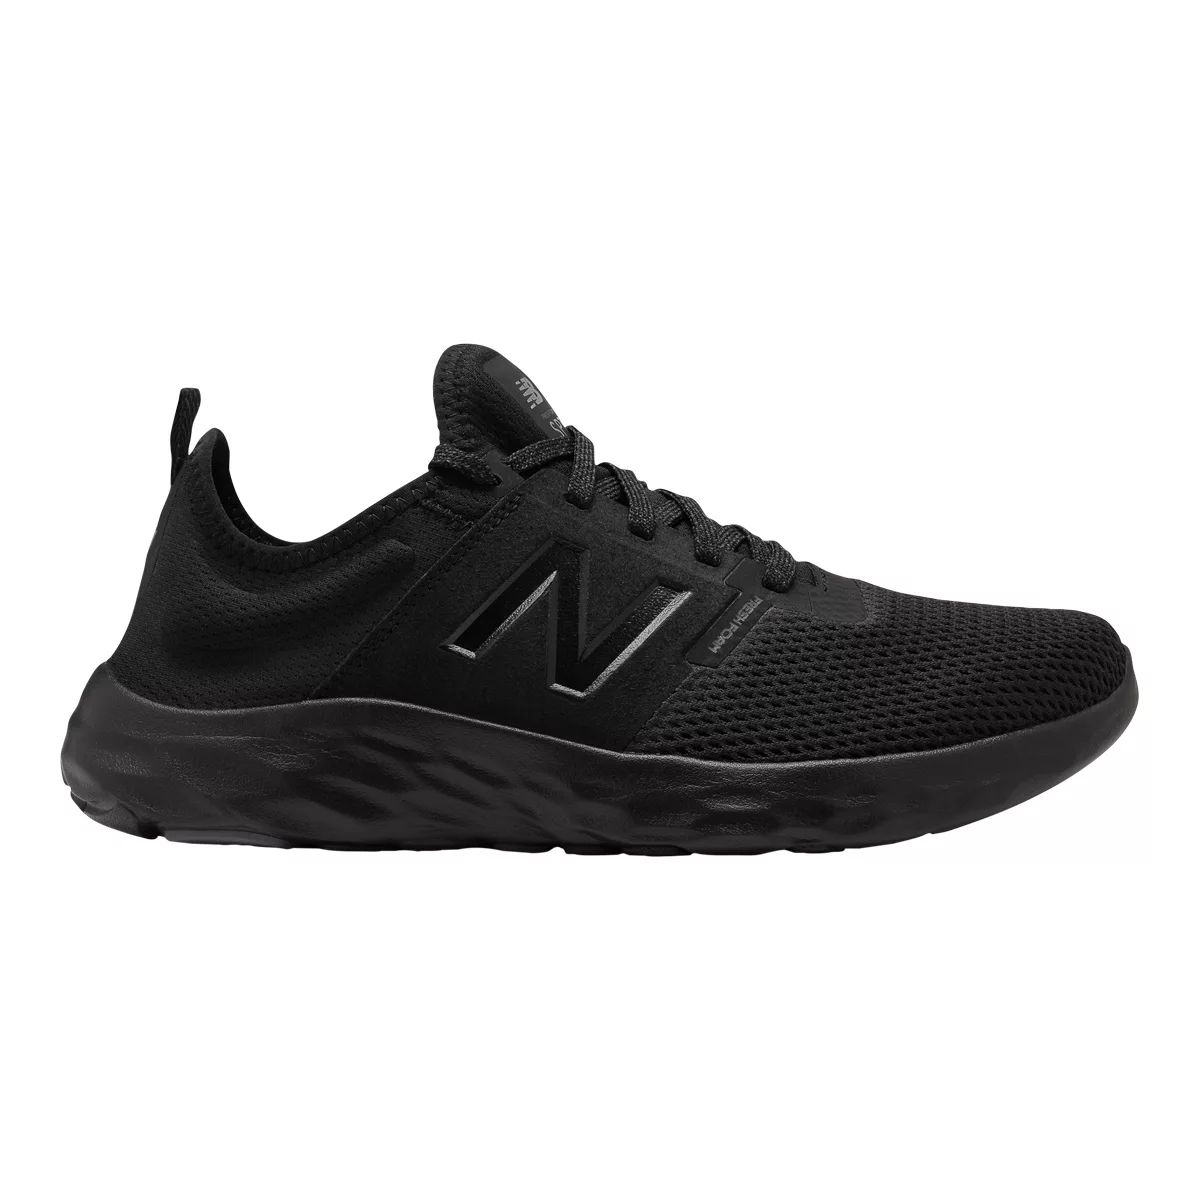 New Balance Shoes Men Black Online | bellvalefarms.com